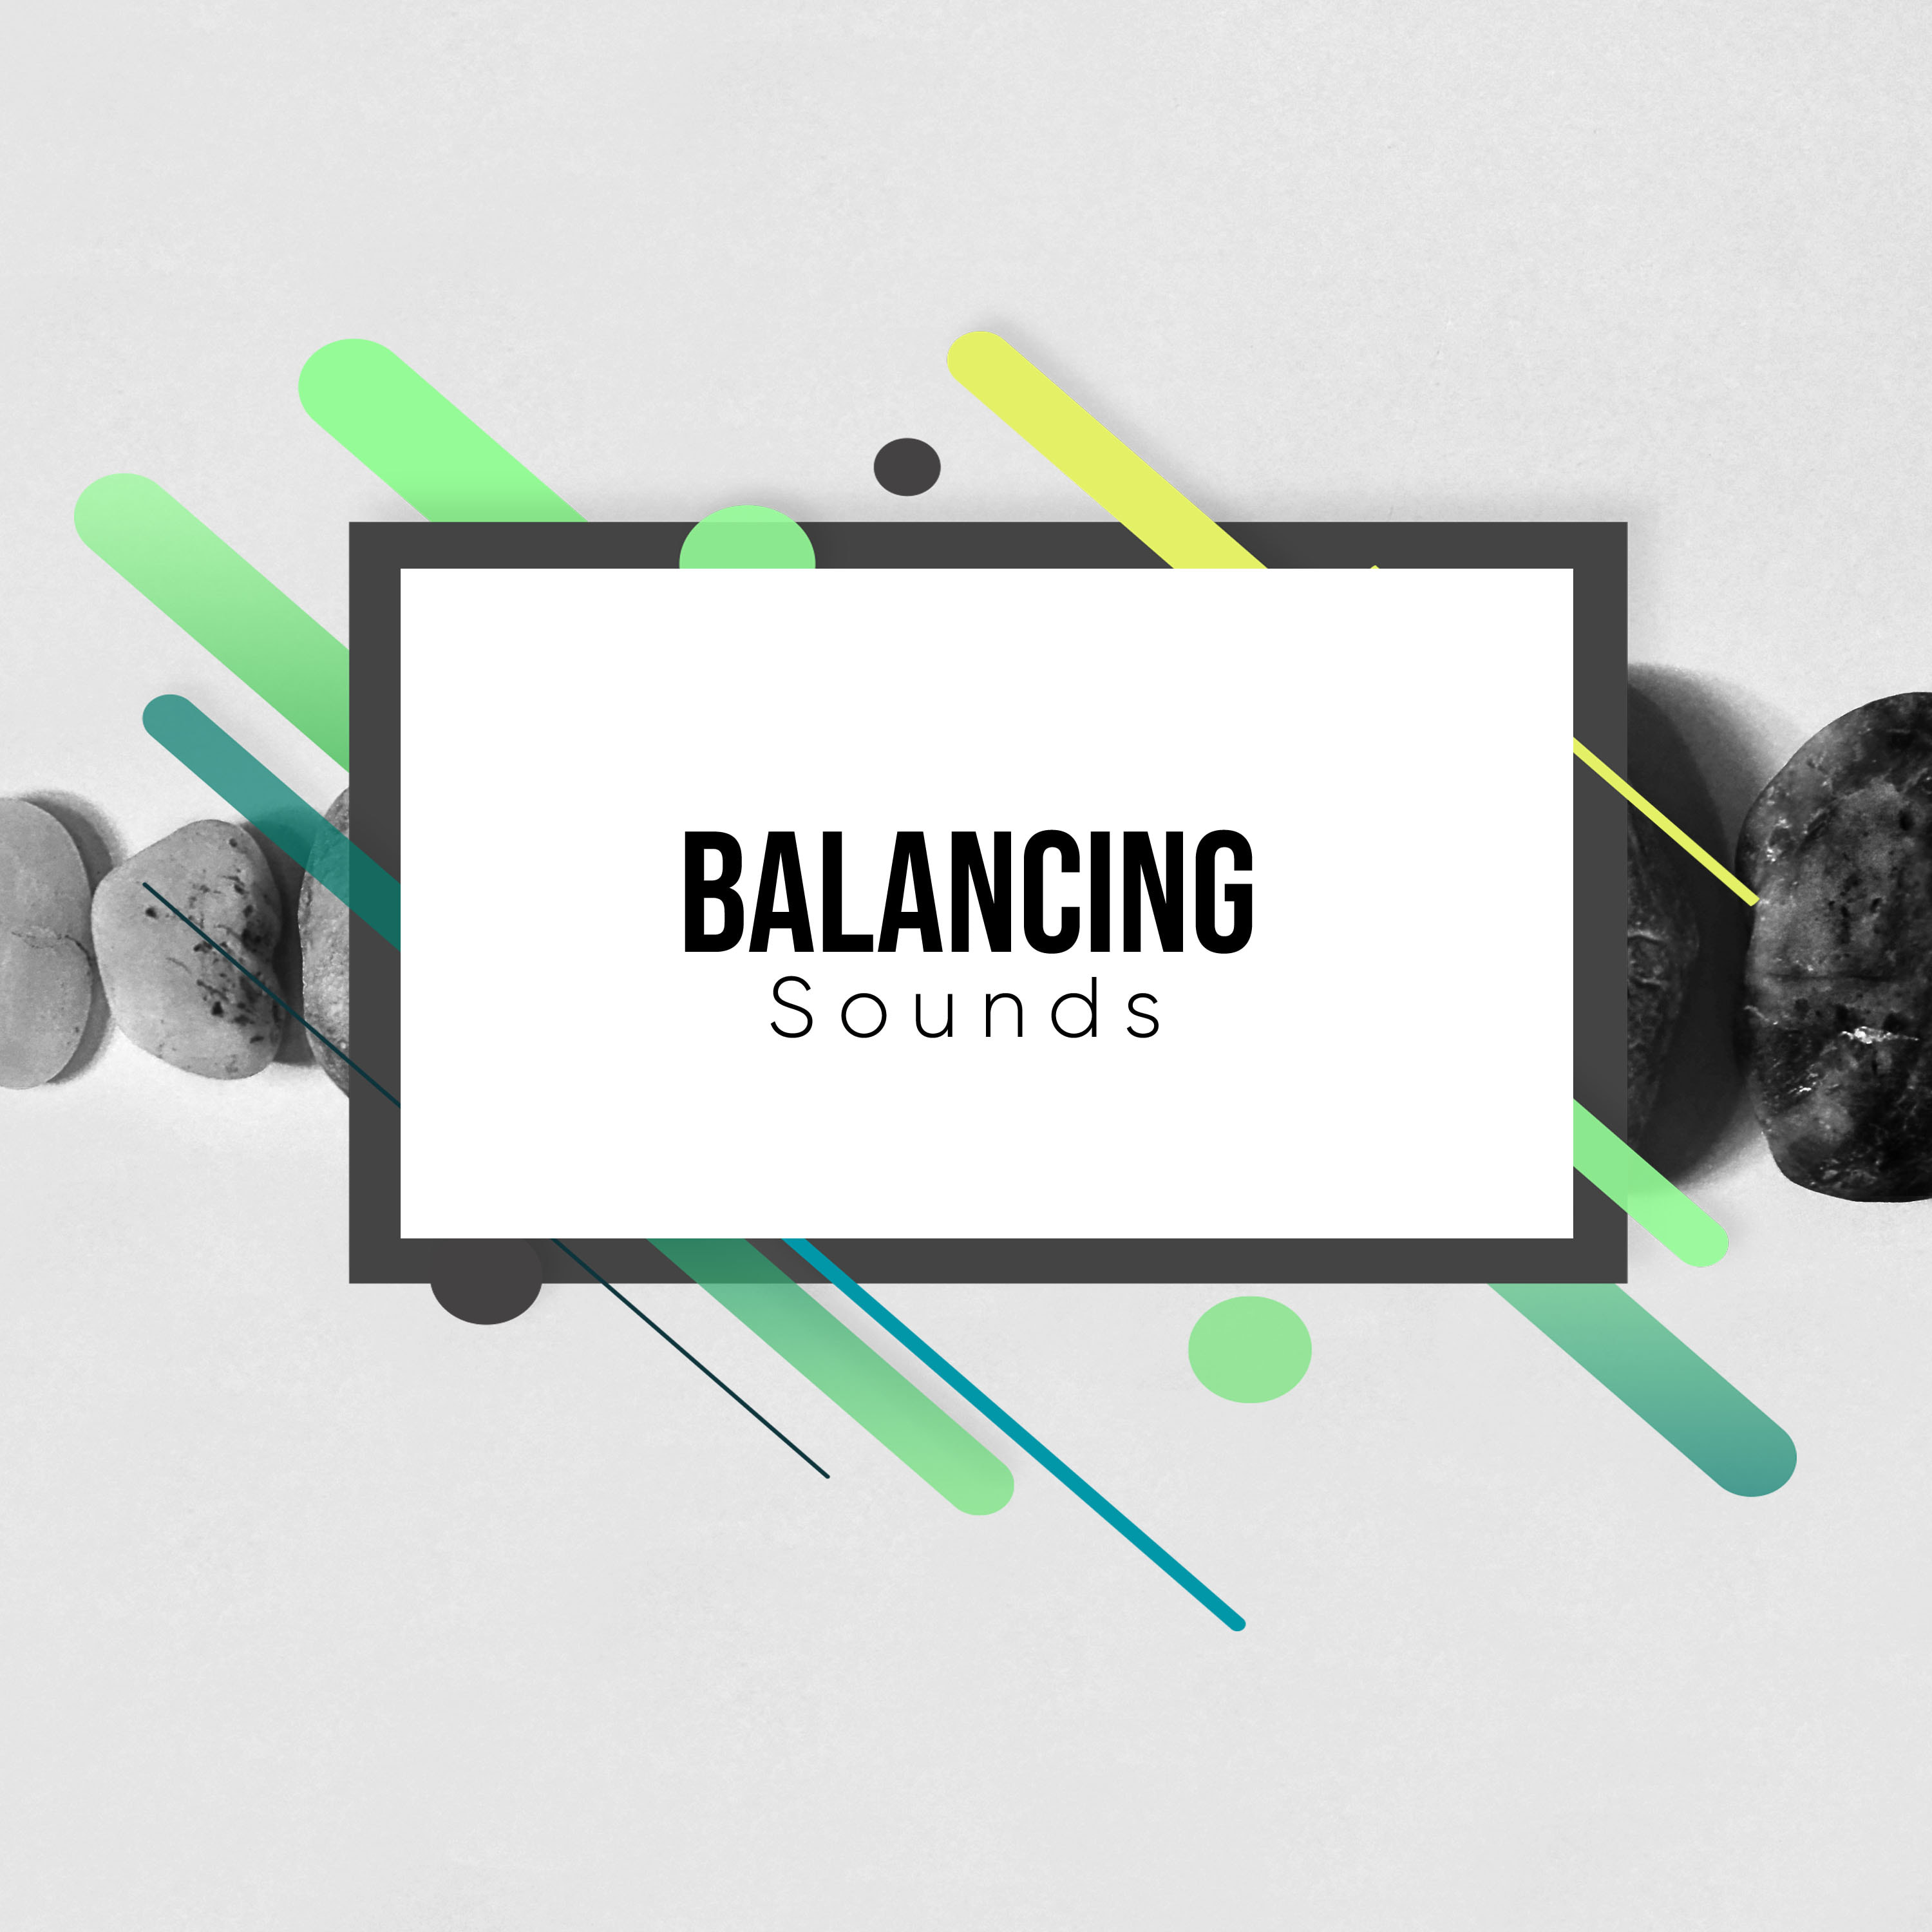 #2018 Balancing Sounds for Meditation